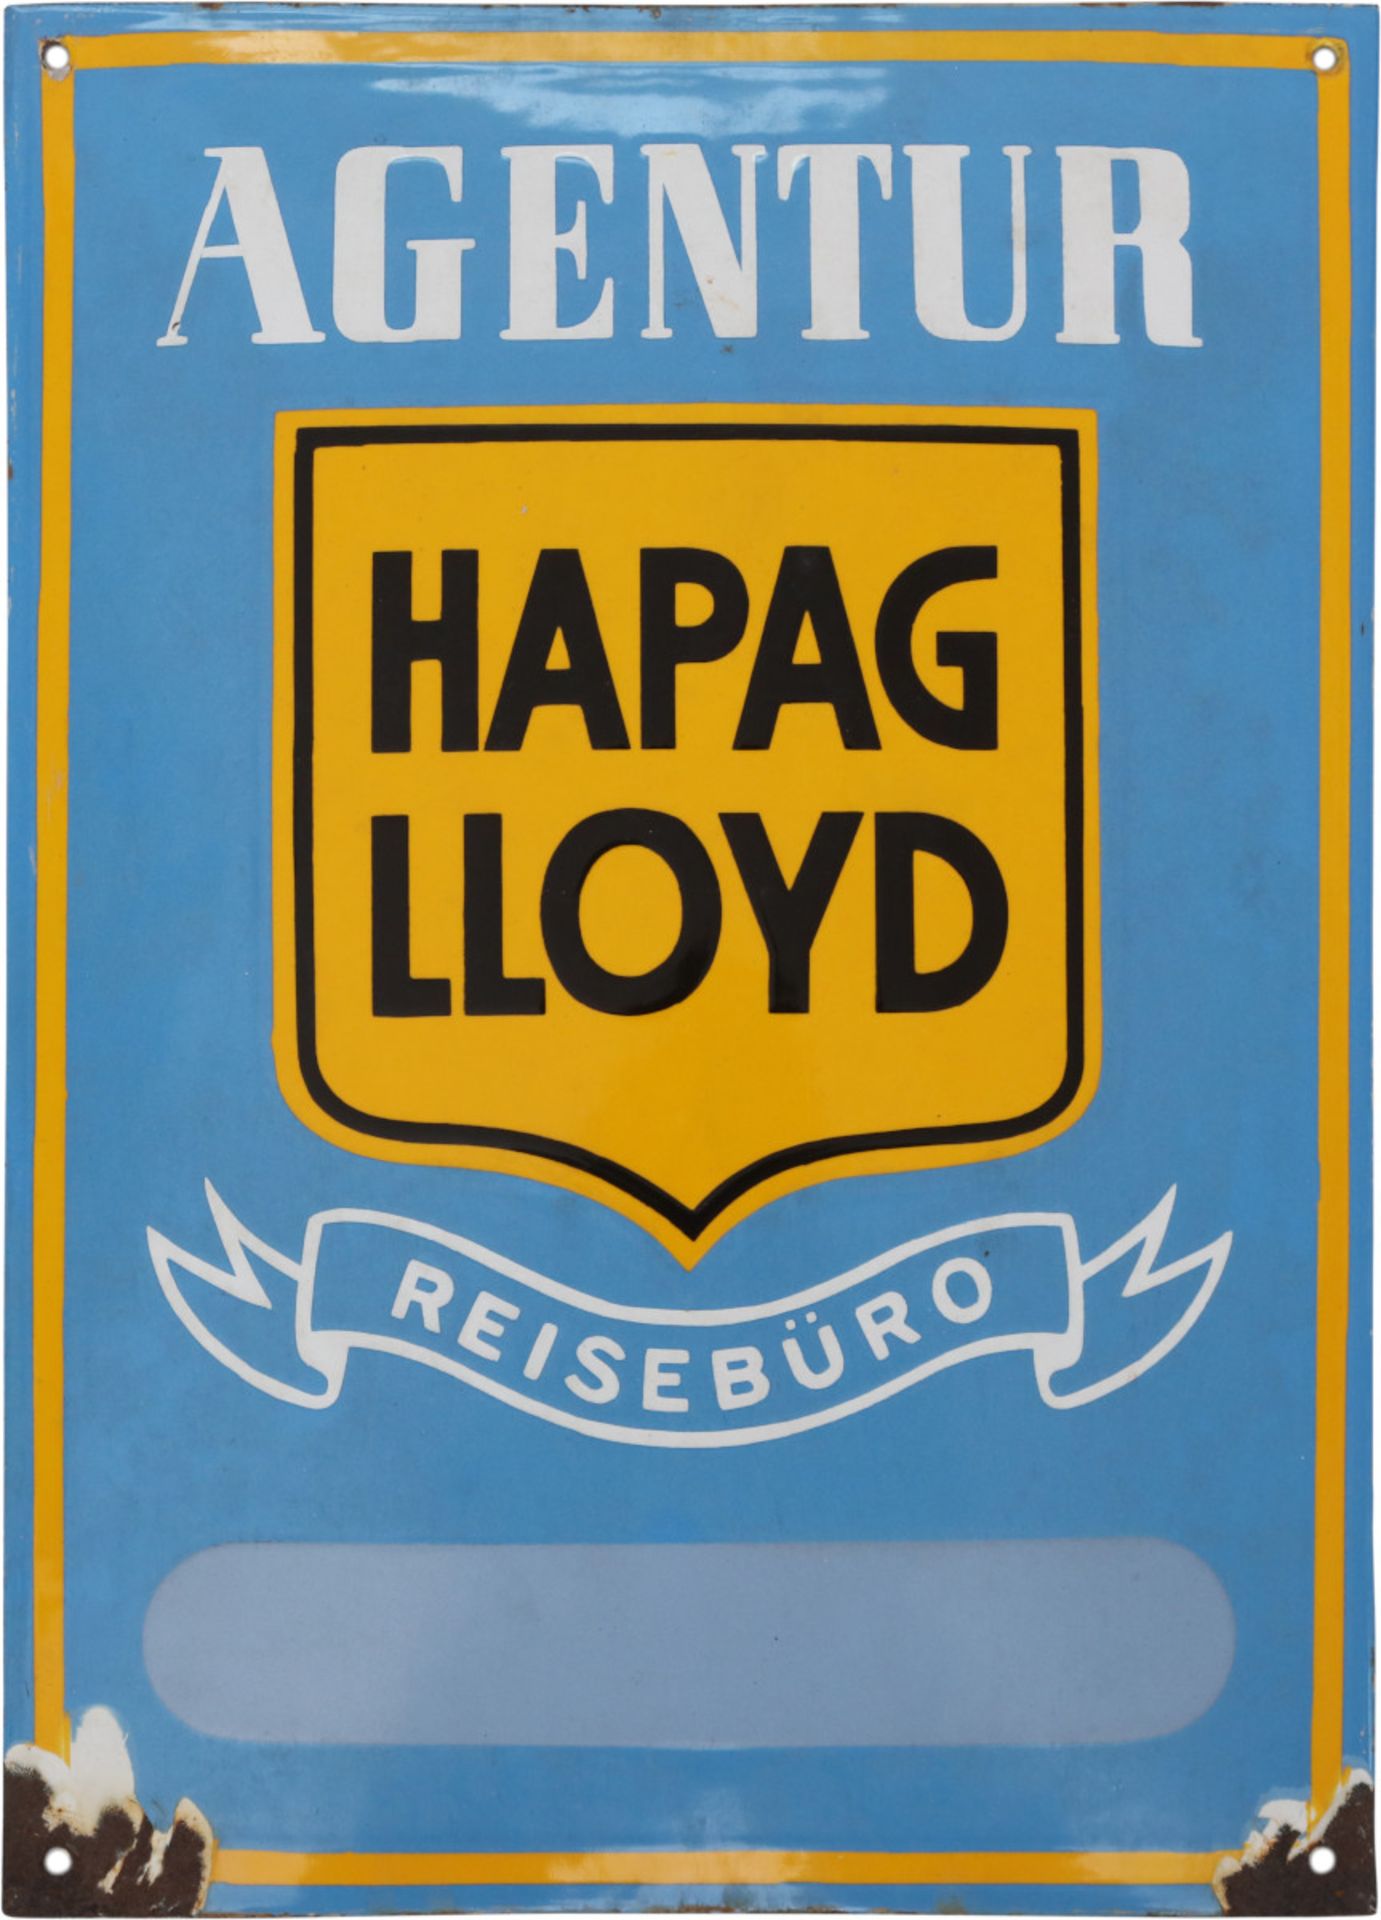 Emailschild Agentur Hapag Lloyd, Hamburg, um 1930